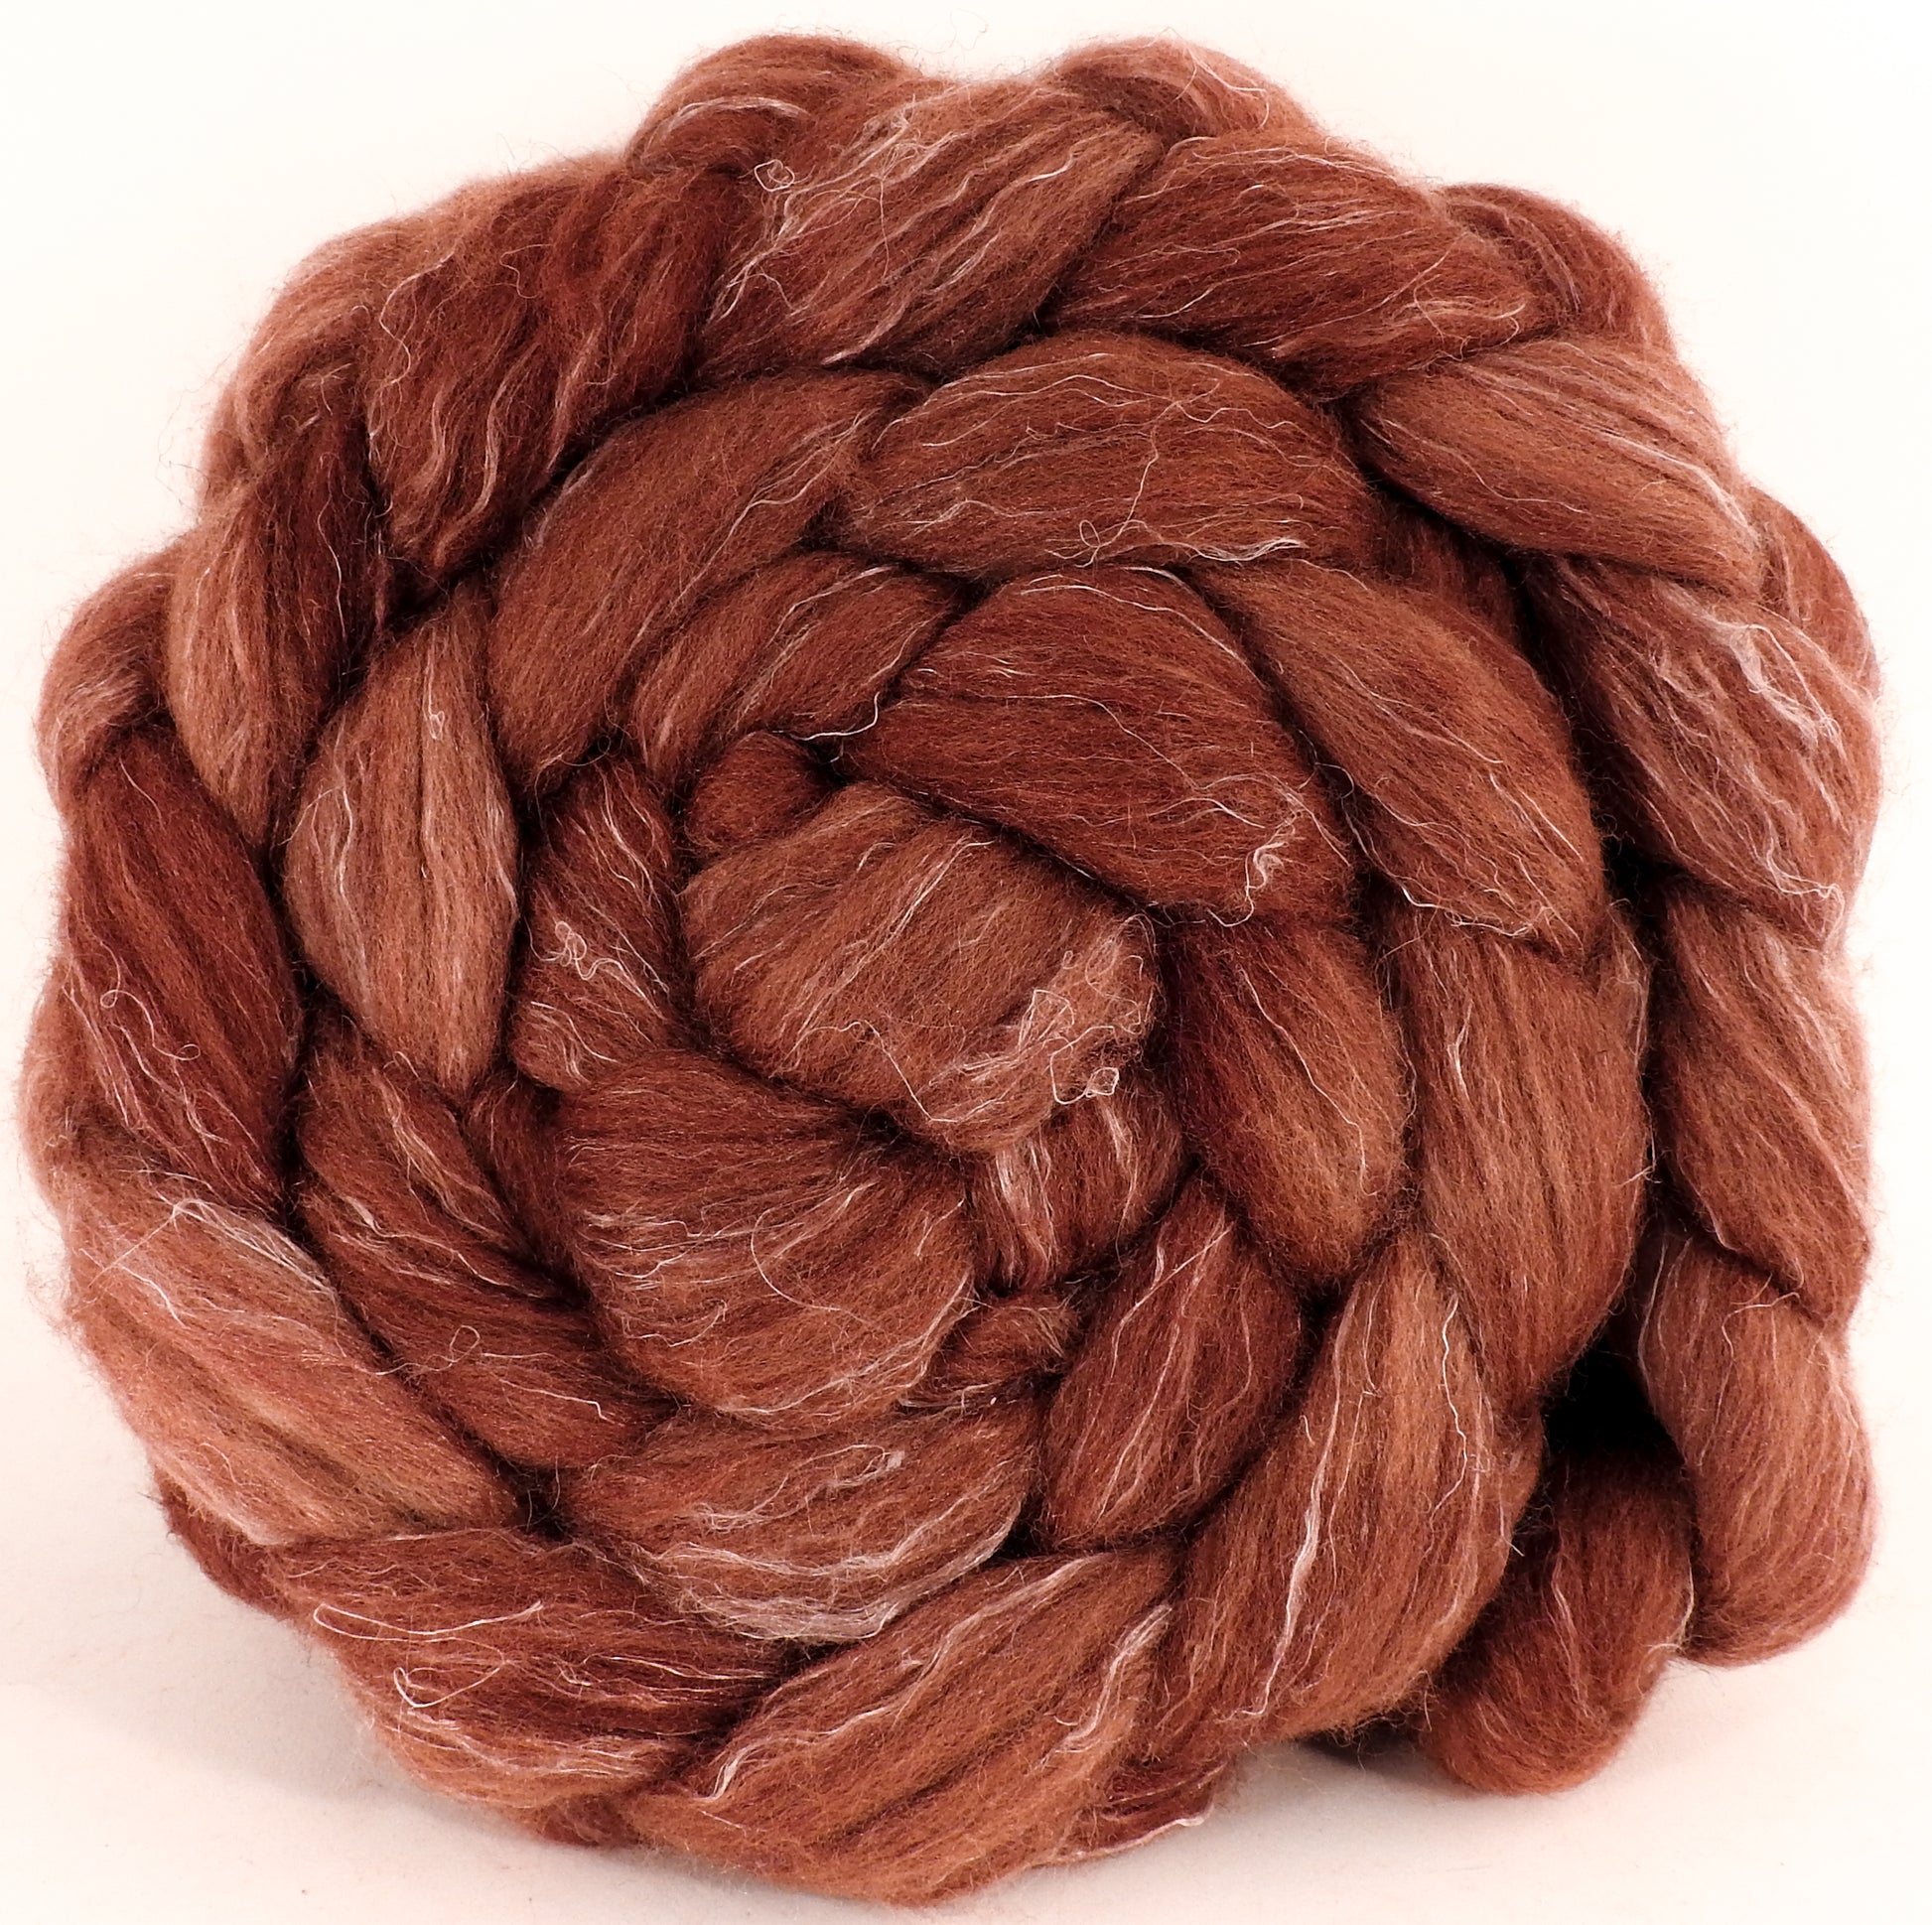 Batt in a Braid #38 - Cloves - (5.5 oz.) Shetland/ Falkland Merino / tussah silk/ flax (40/25/25/10) - Inglenook Fibers